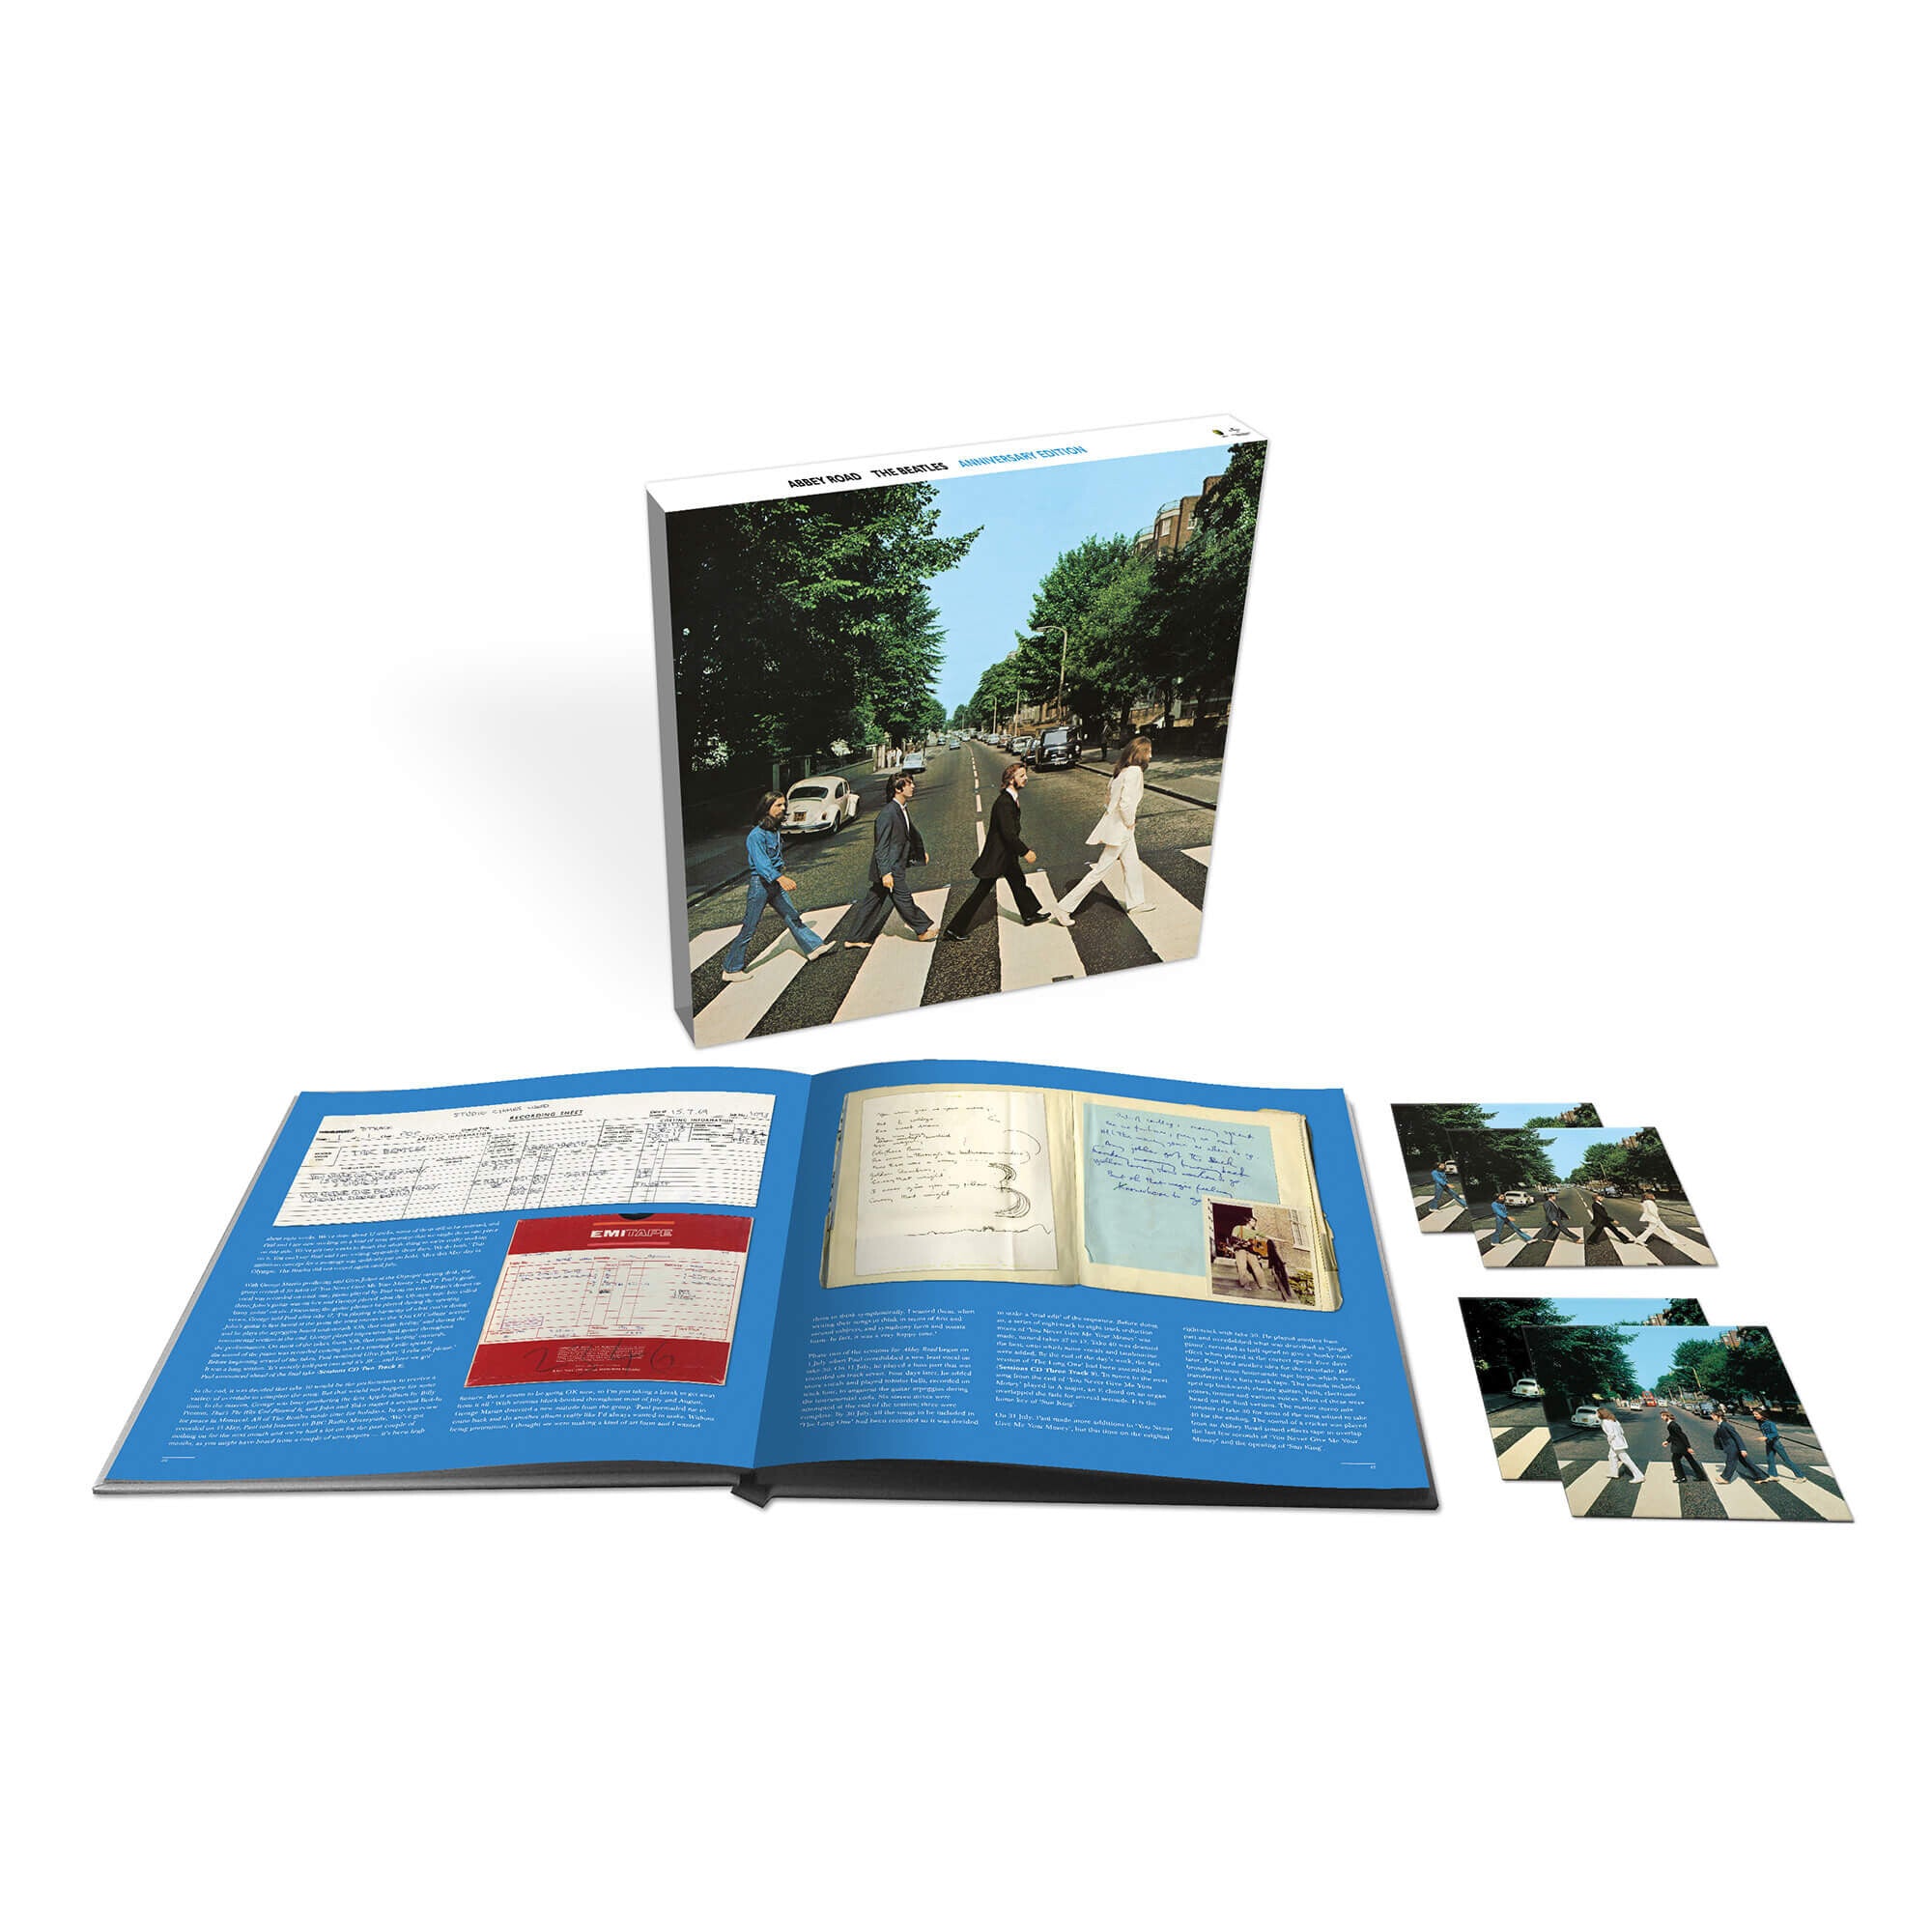 https://images.bravado.de/prod/product-assets/product-asset-data/beatles-the/the-beatles-international-1/products/130644/web/291980/image-thumb__291980__3000x3000_original/The-Beatles-Abbey-Road-Anniversary-Edition-Ltd-3LP-Box-Vinyl-Box-130644-291980.jpg